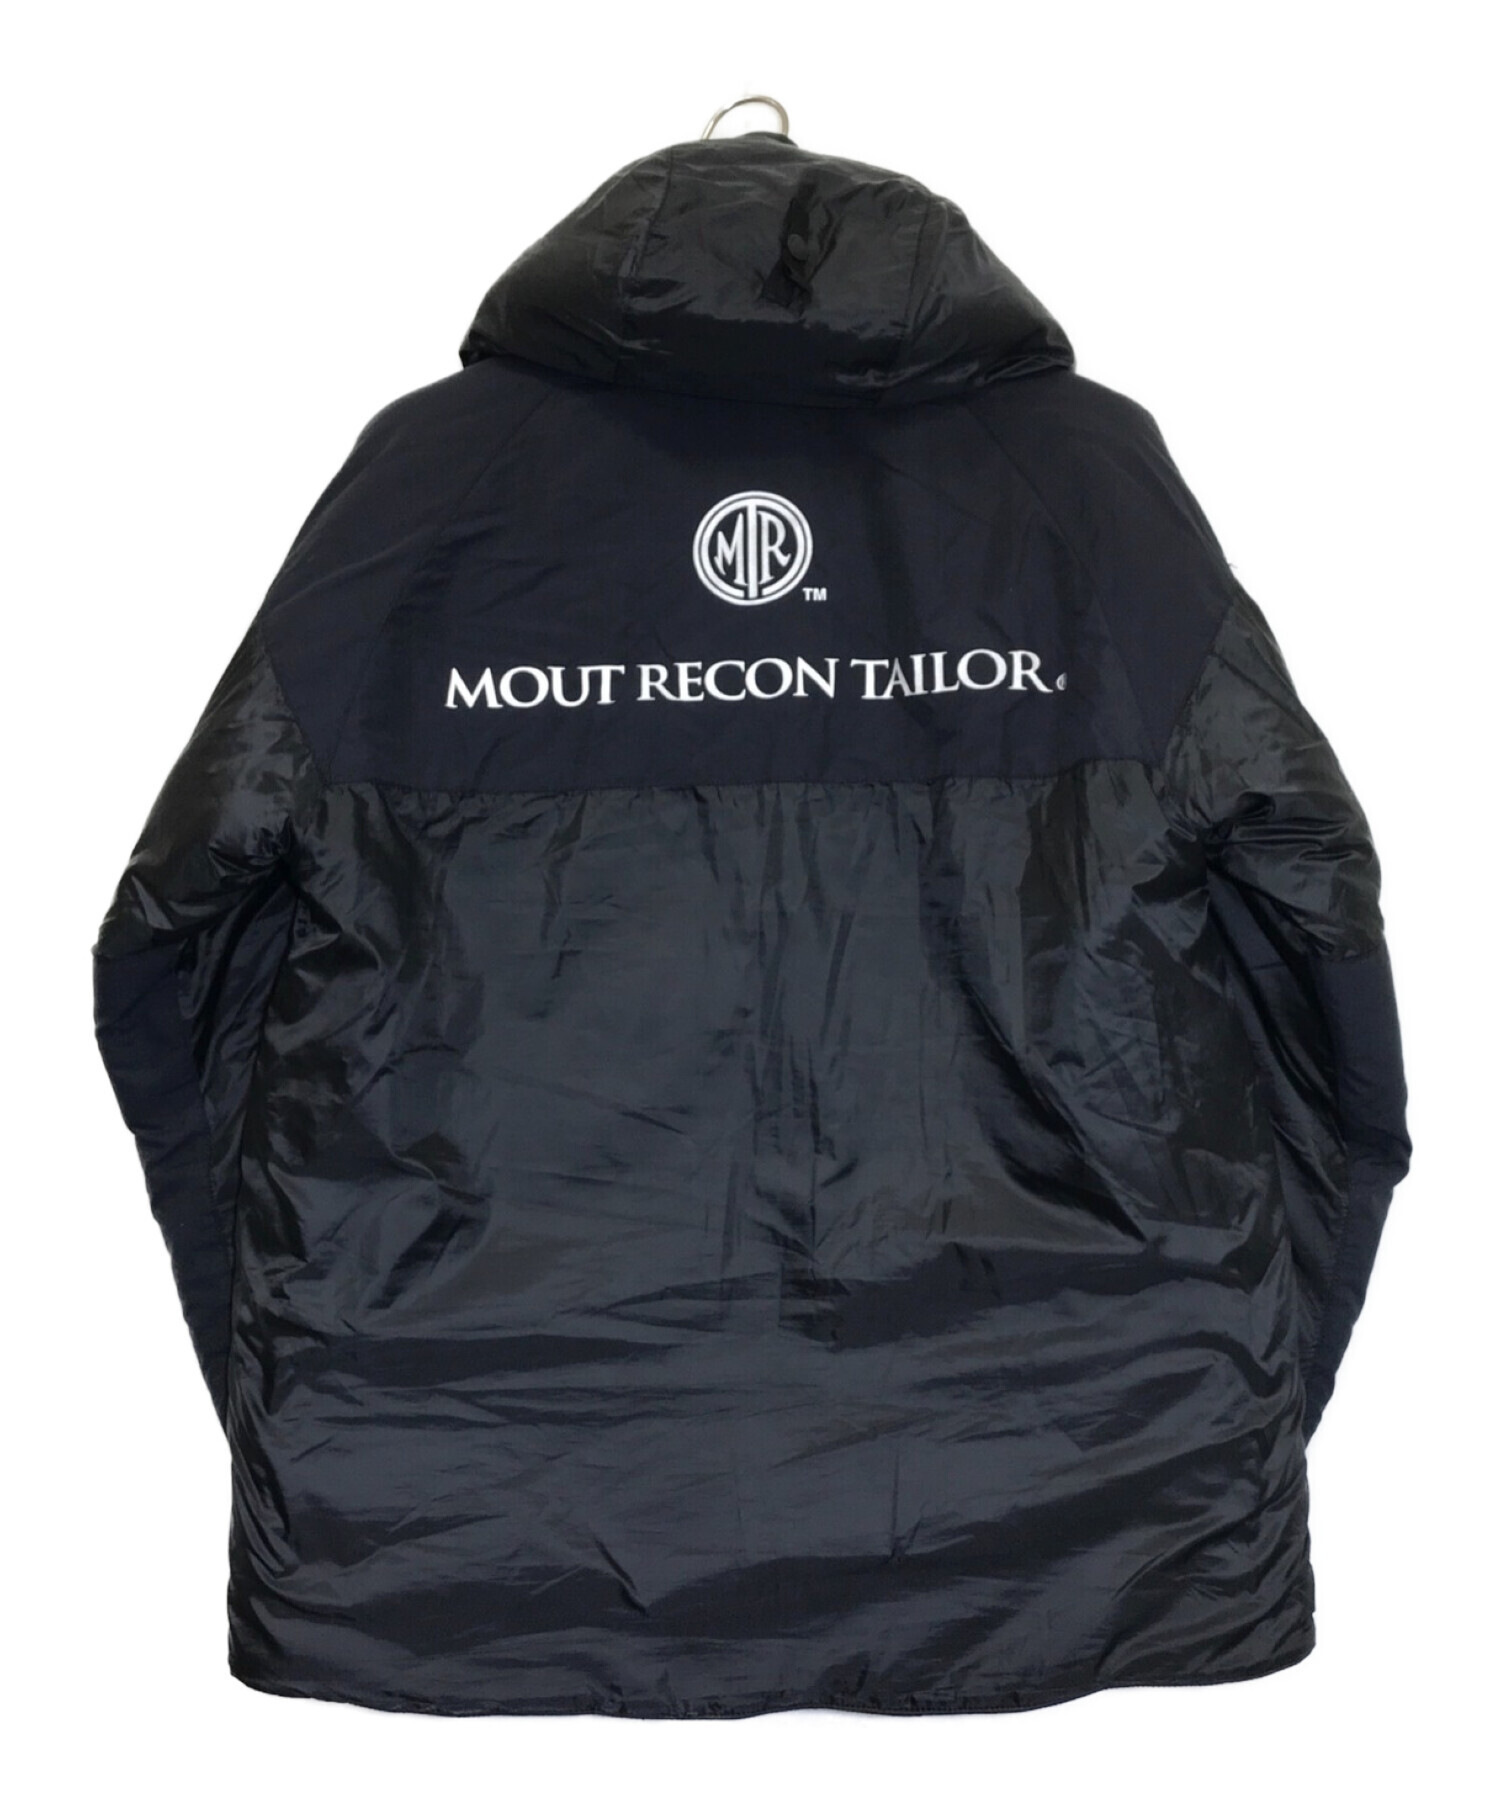 mout recon tailor (マウトリーコンテーラー) Inshulation Jacket ブラック サイズ:48